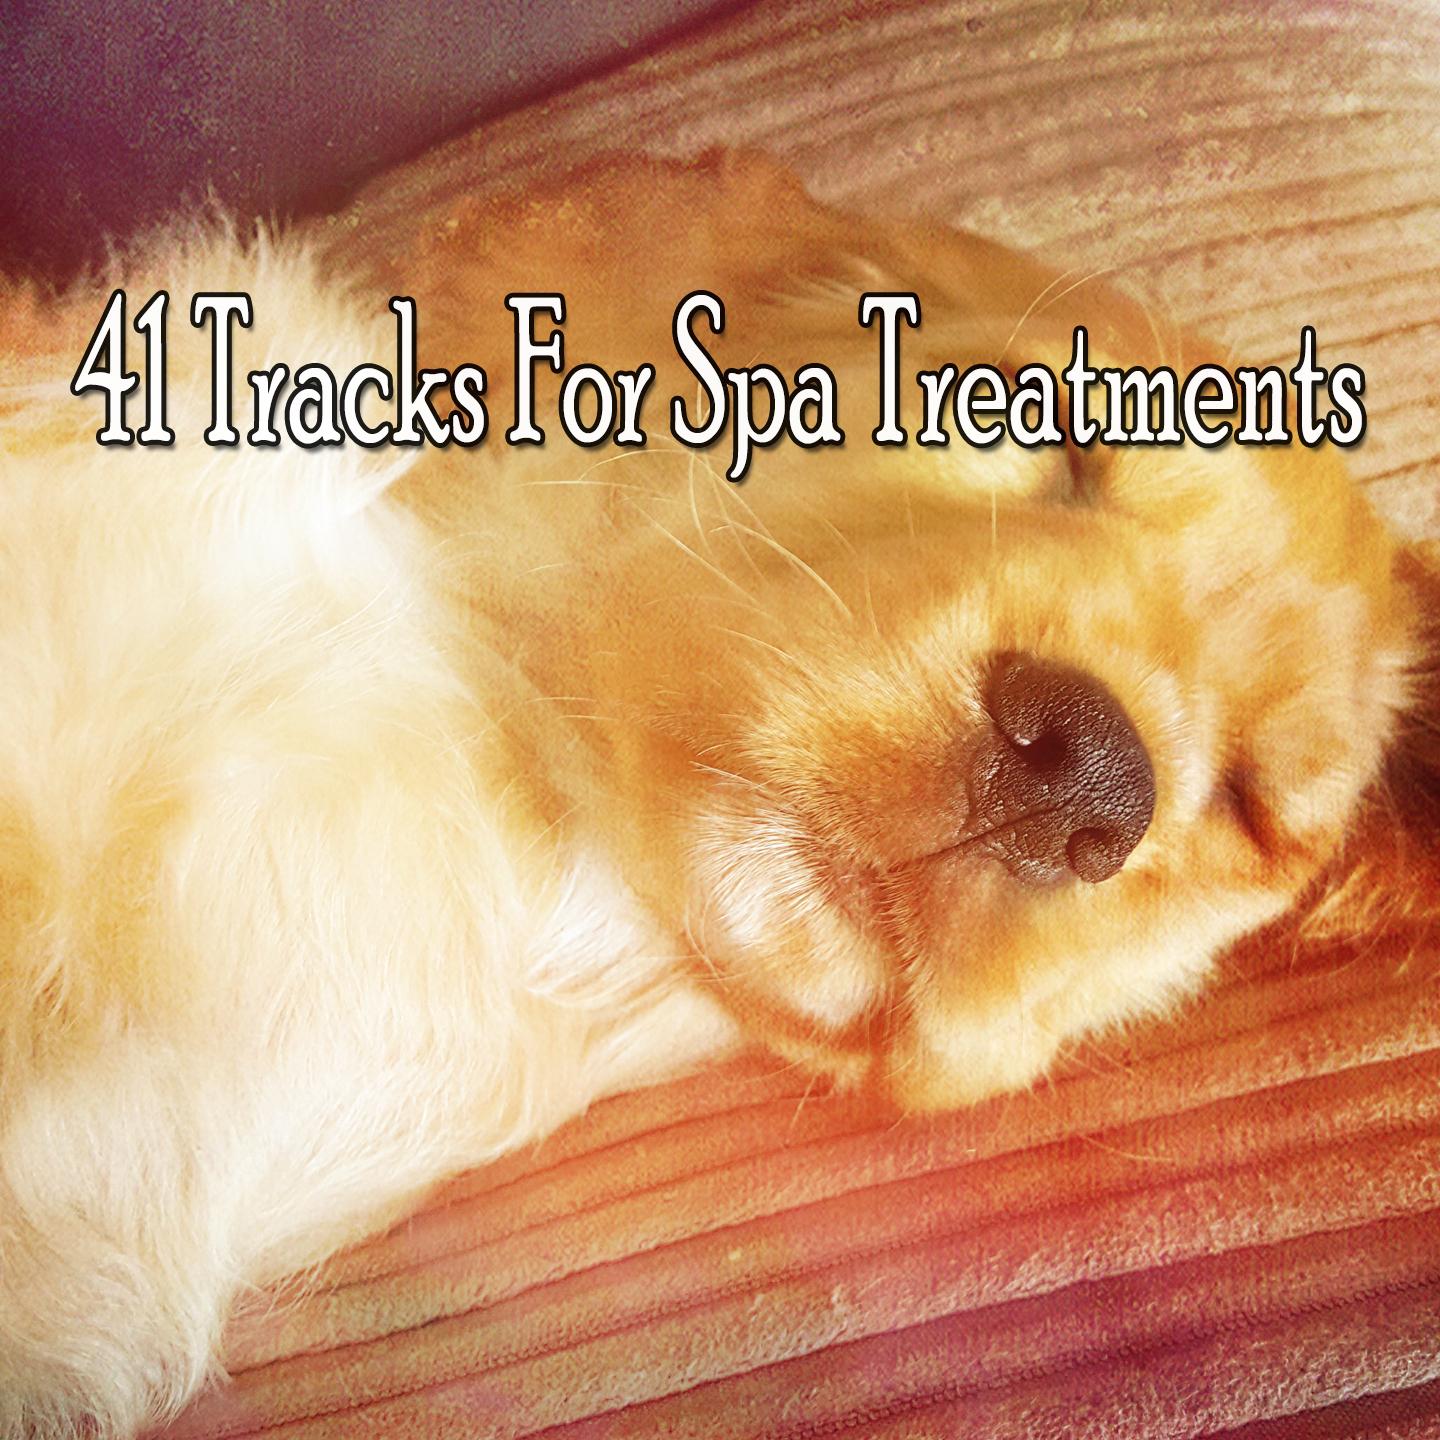 41 Tracks For Spa Treatments